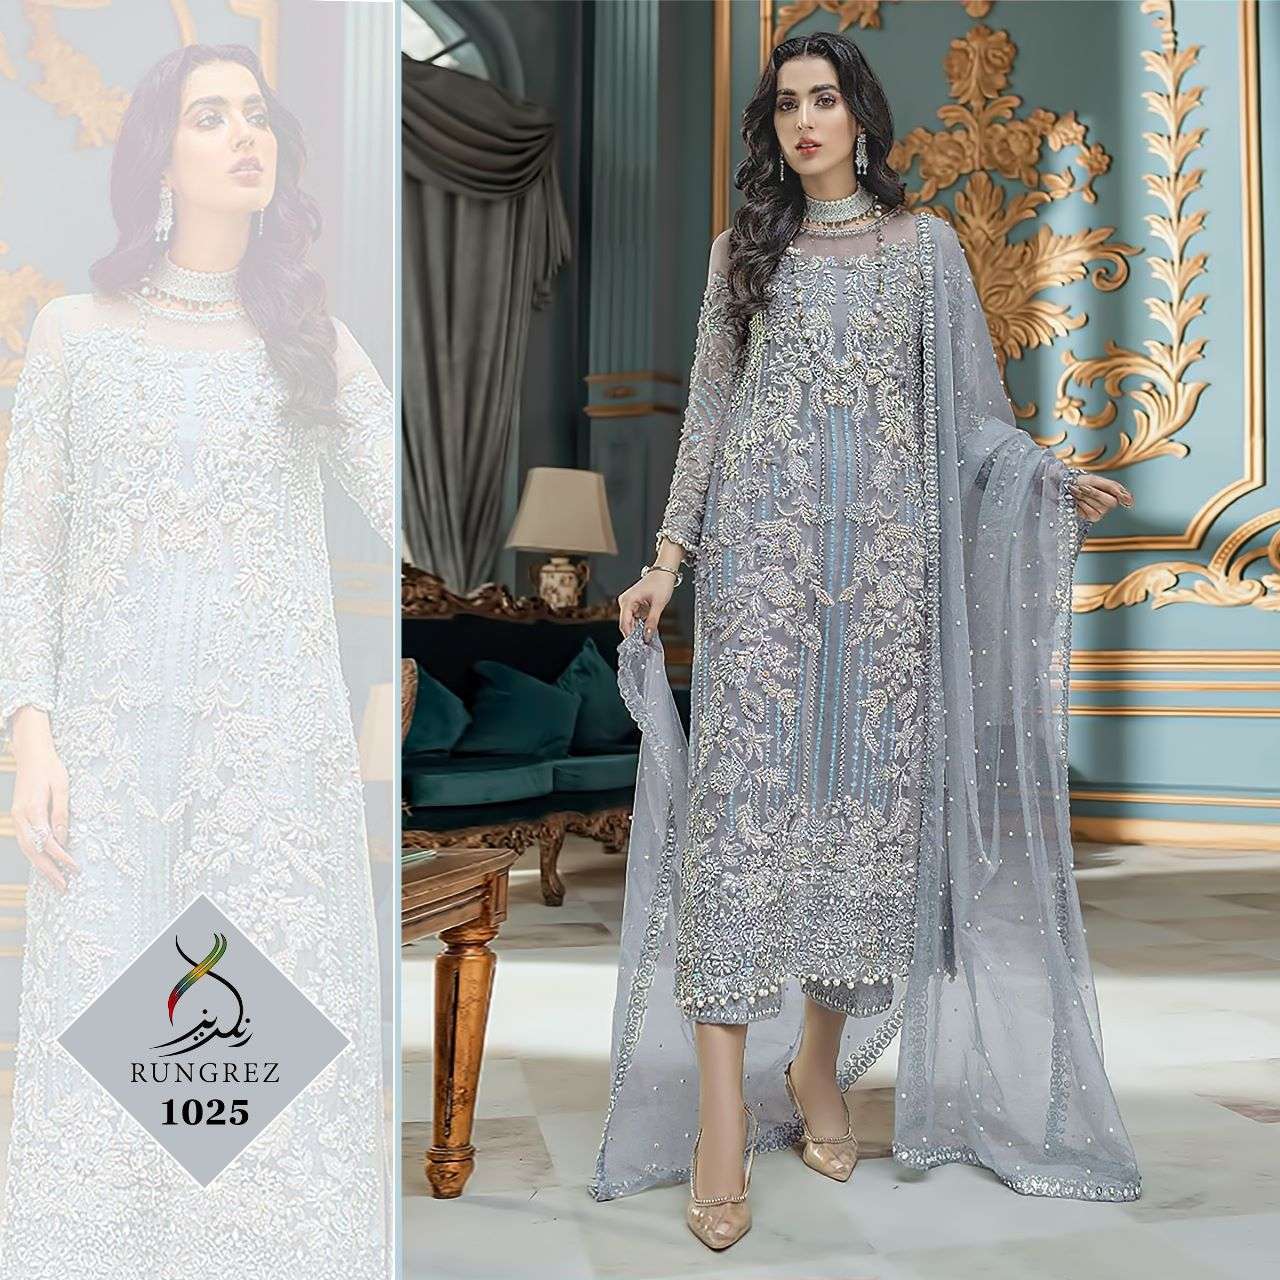 Rangrez 1025 Net with Embroidery work pakistani Dress materi...